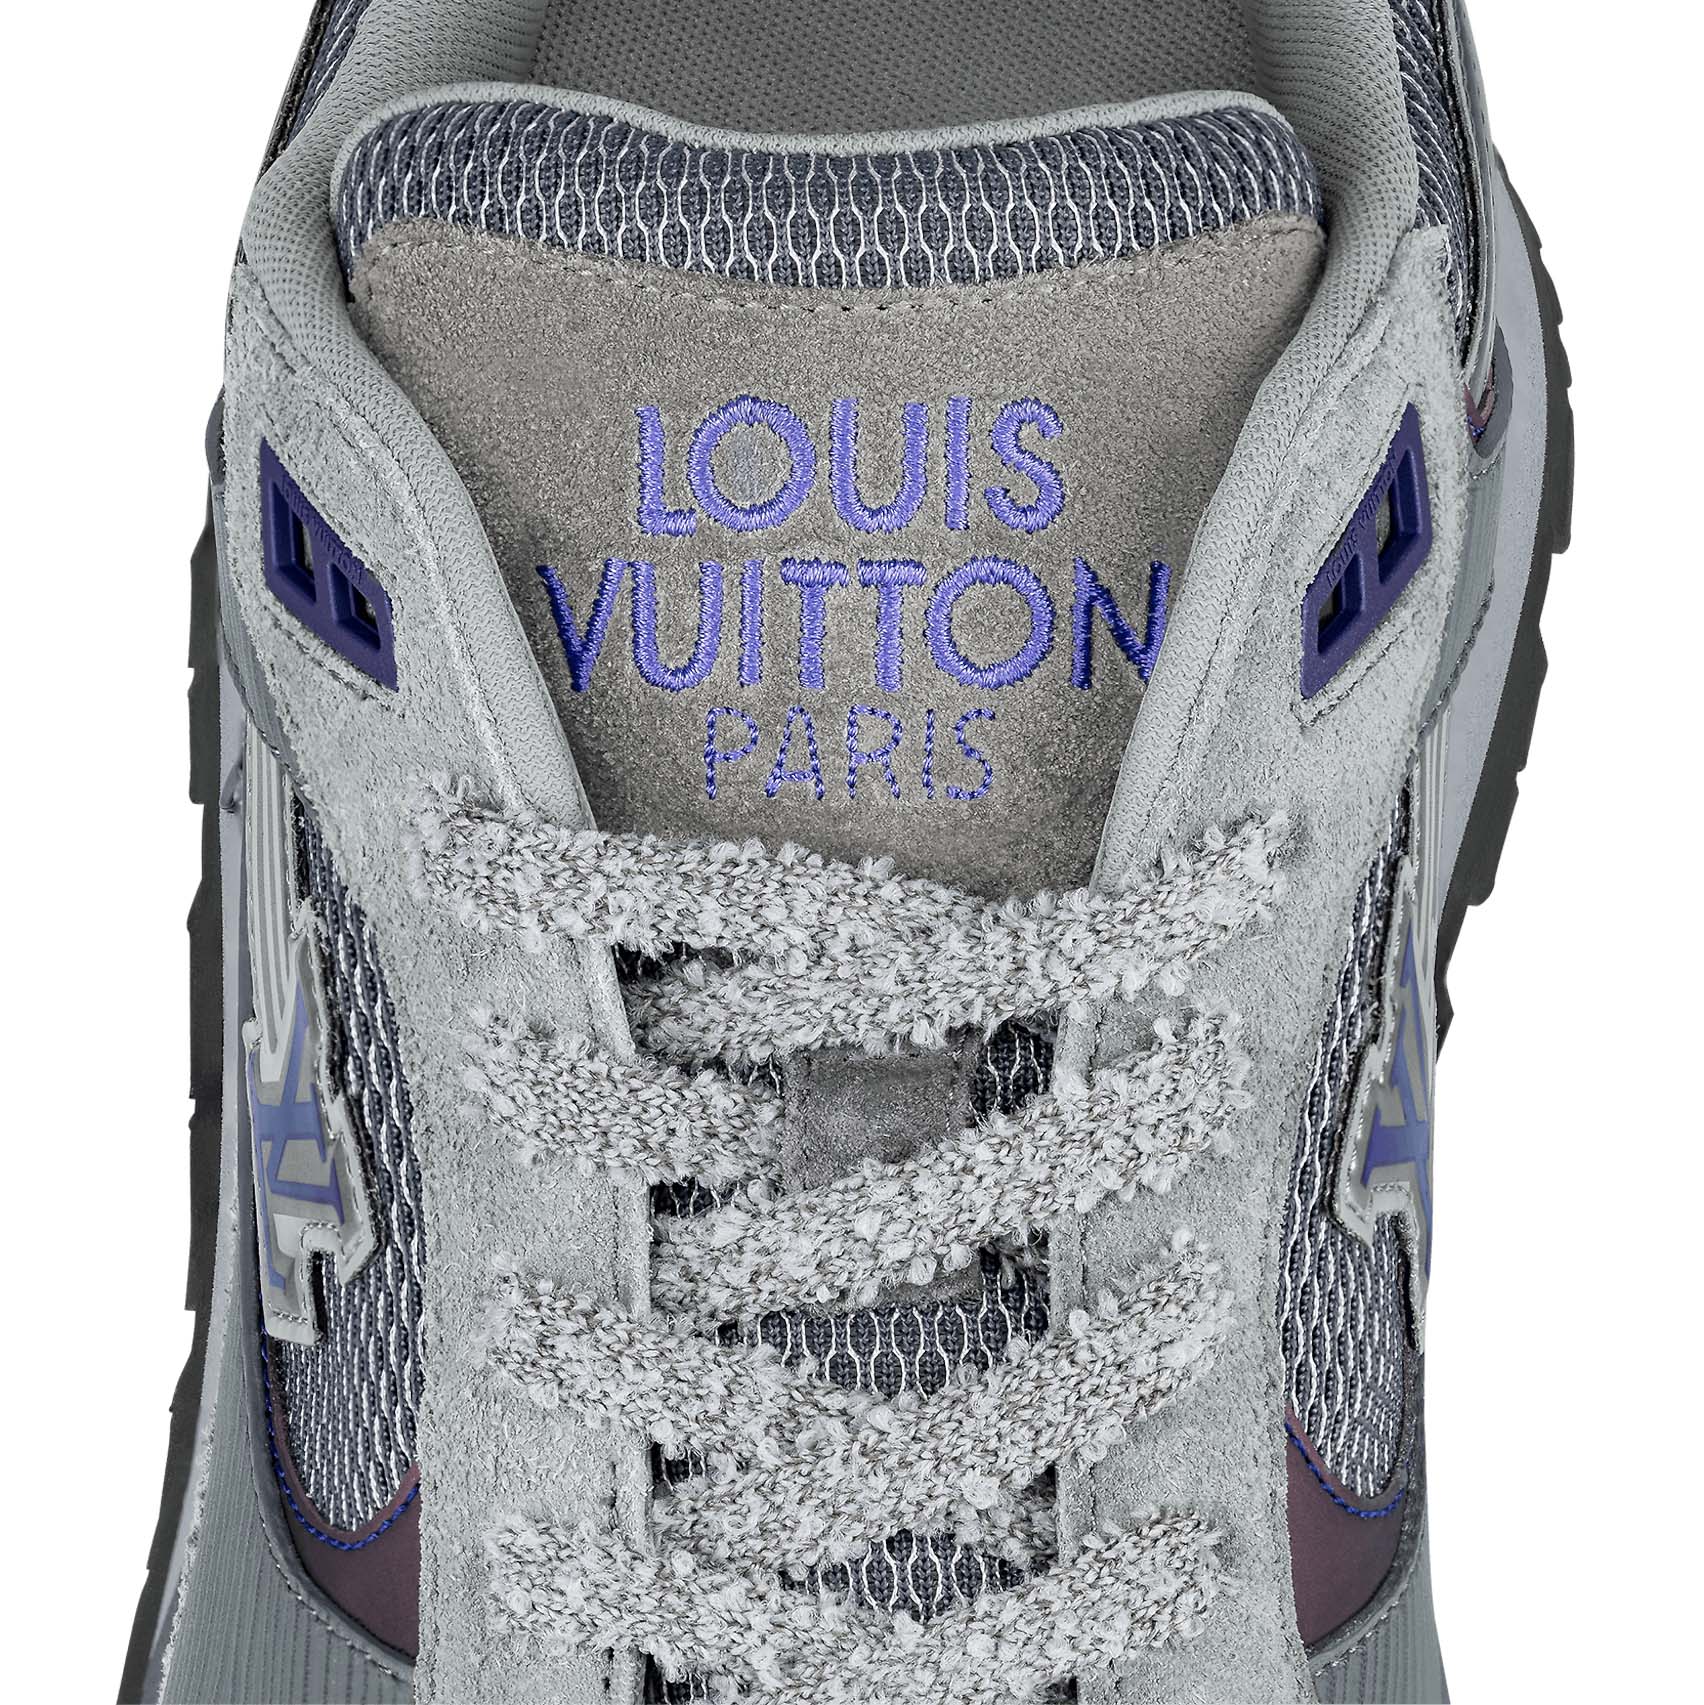 Louis Vuitton Trainer Sneaker Purple - shoes lovers